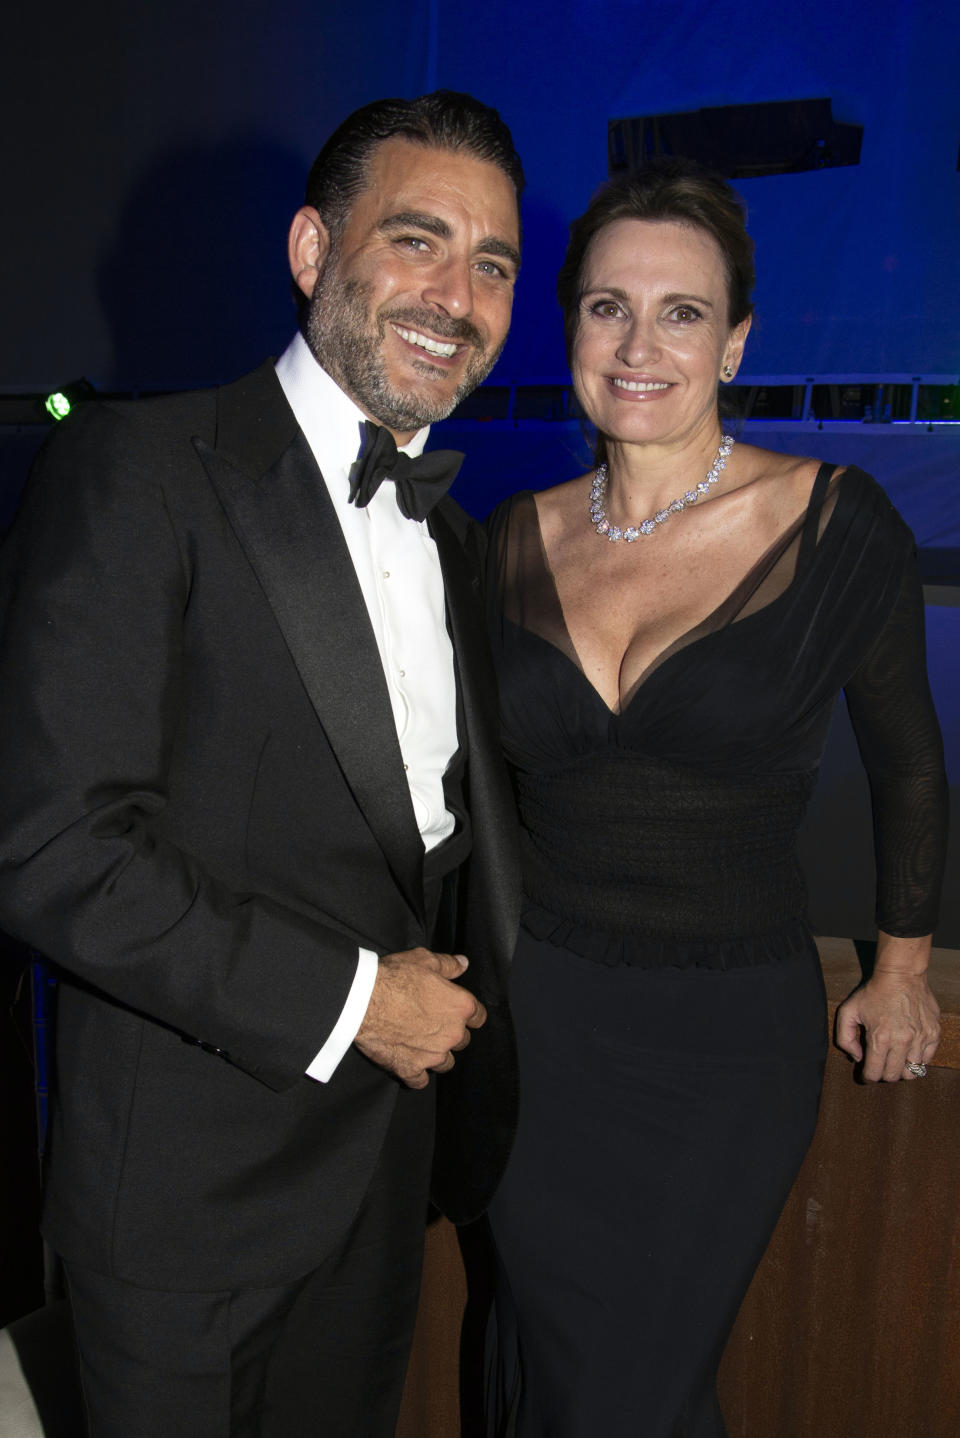 MARBELLA&lt;SPAIN - AUGUST 11: Matias Urrea and Ainhoa Arteta attend the Starlite Gala on August 11, 2018 in Marbella, Spain. (Photo by Europa Press via Getty Images)